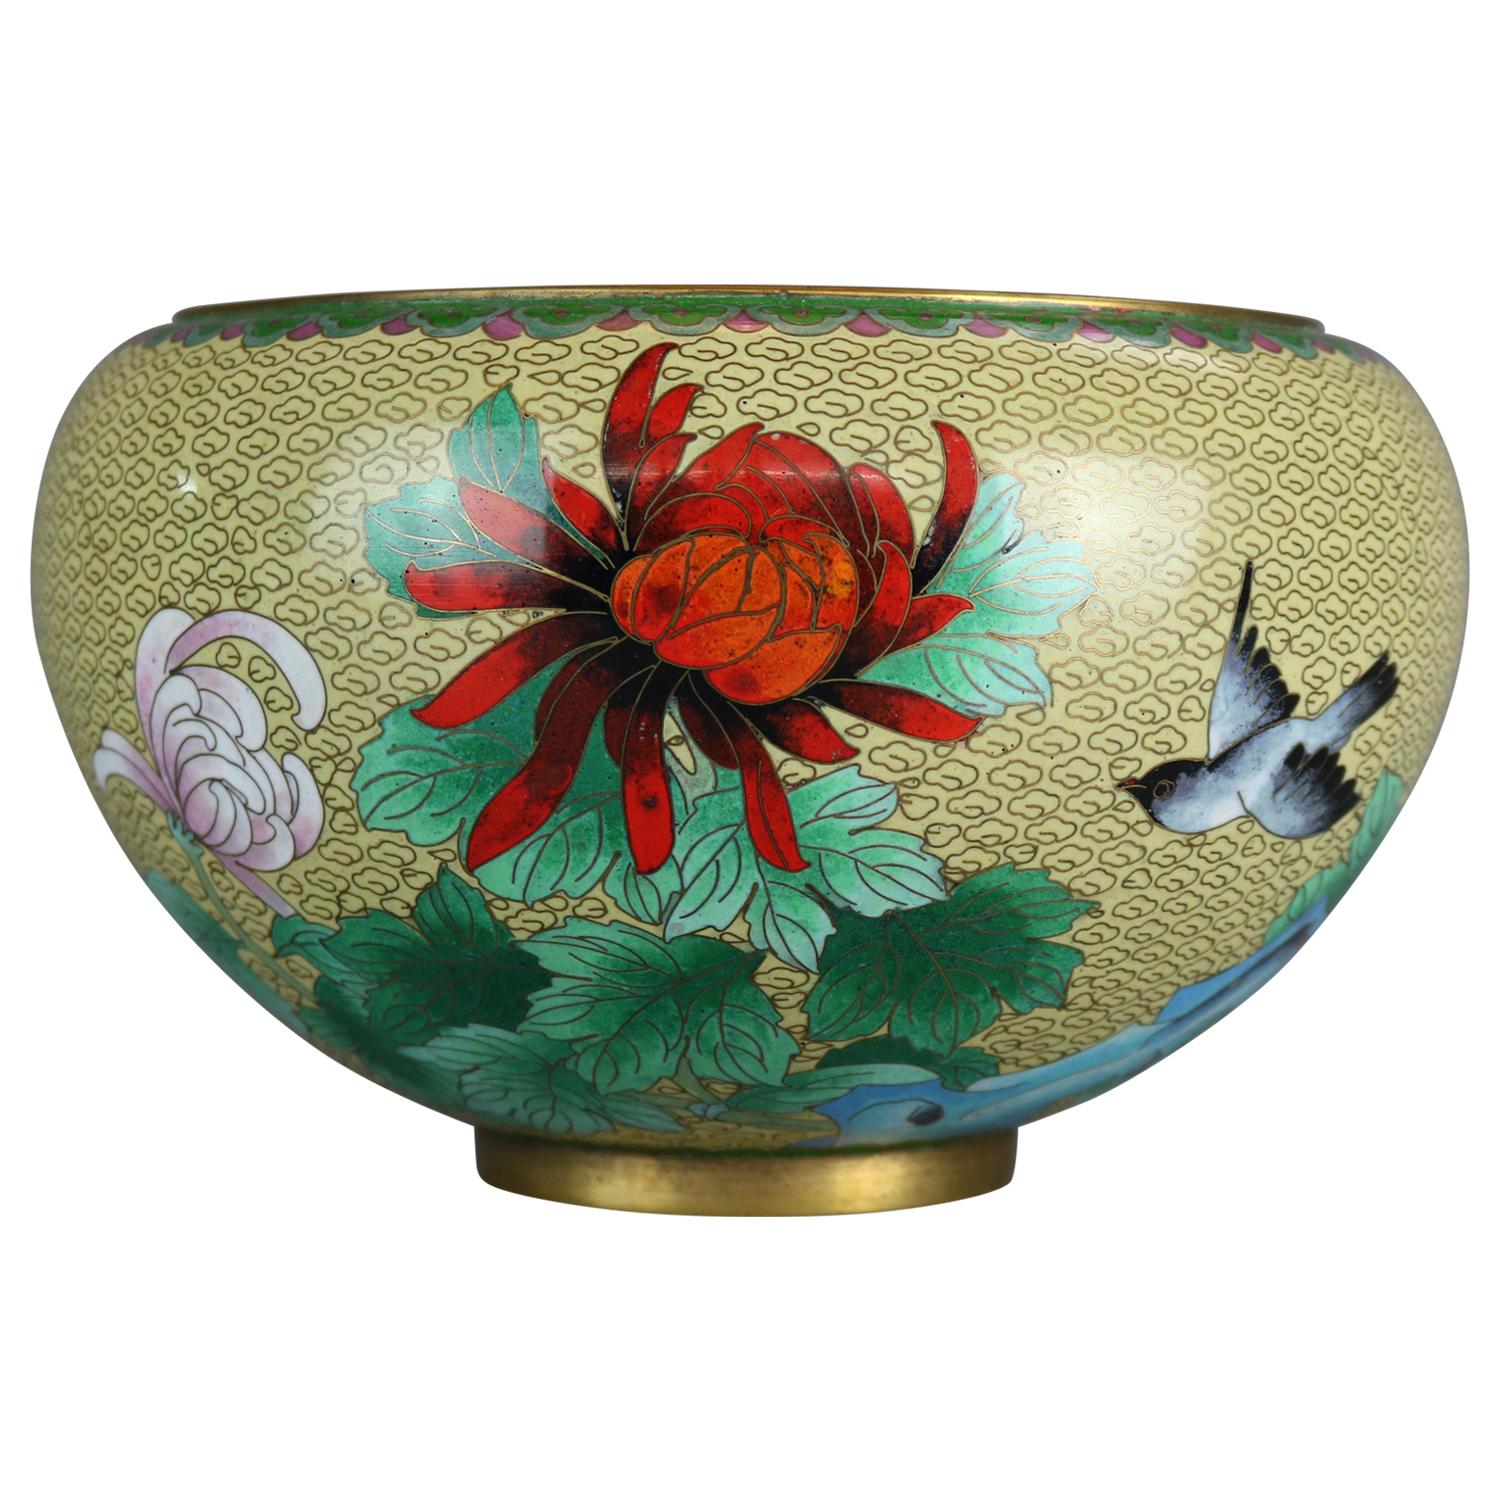 Antique Chinese Polychrome Floral Cloisonné Enameled Bowl, circa 1900